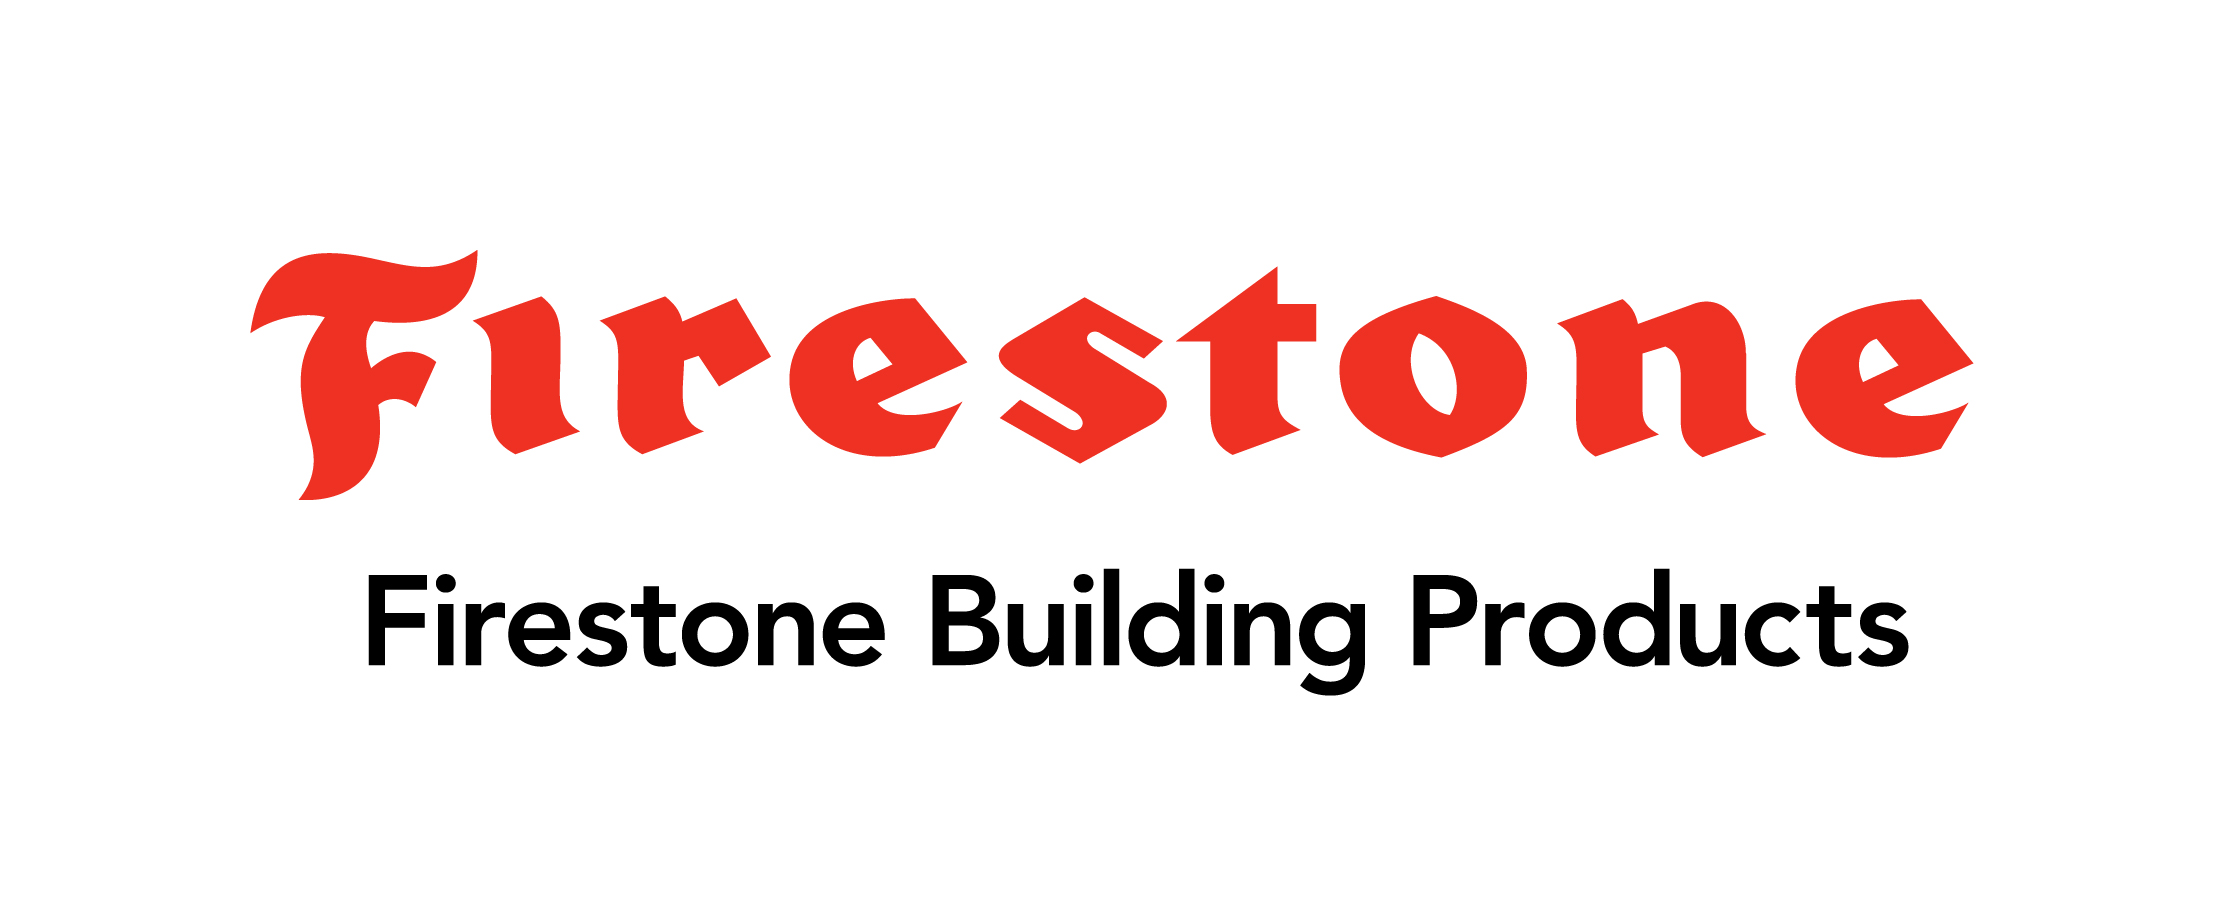 Firestone | Brands Of The Wor